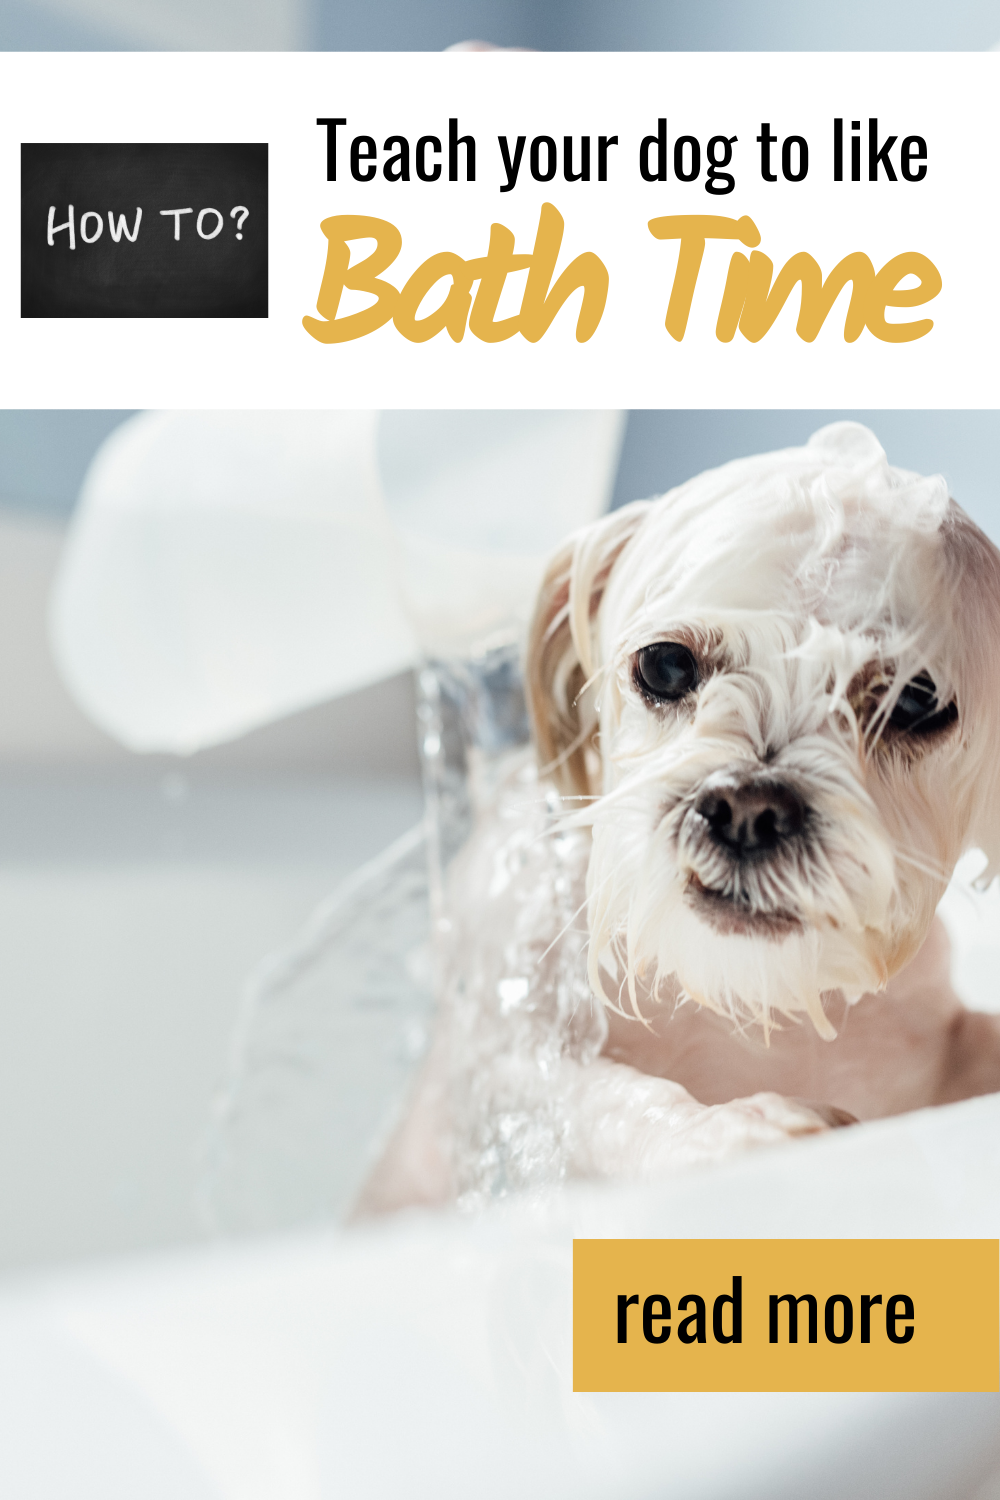 How to Teach Your Dog to Like Baths